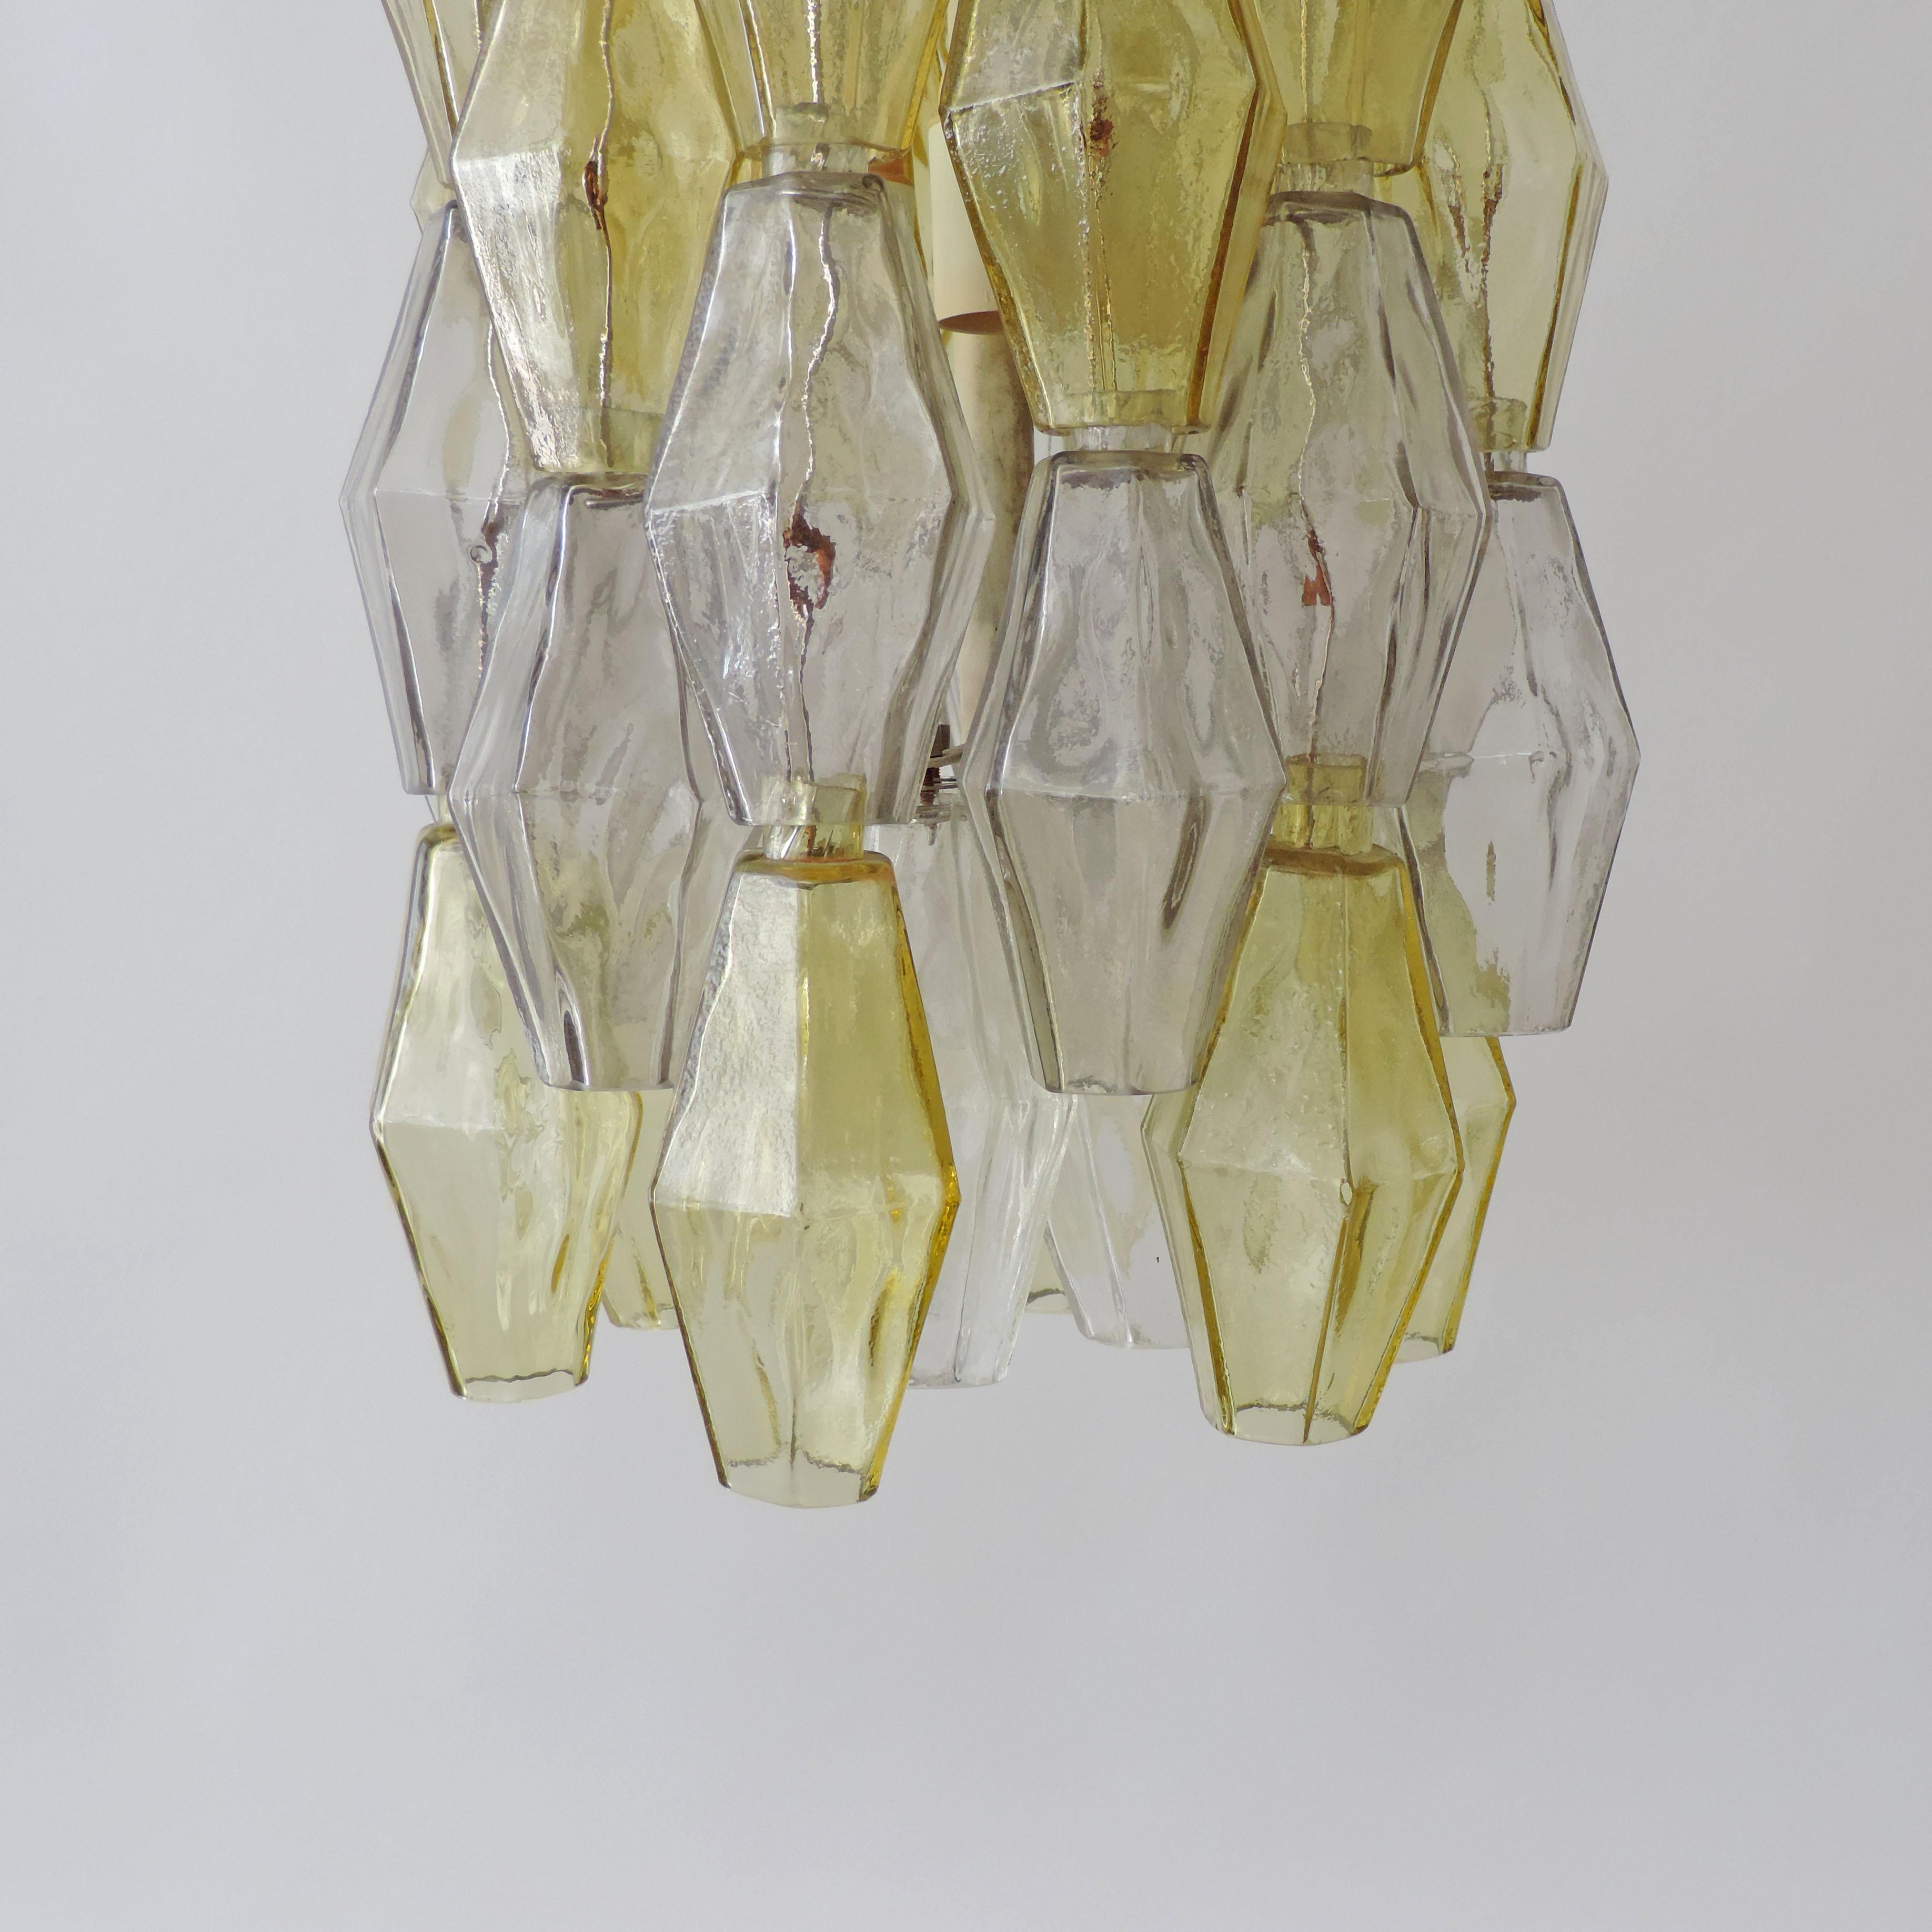 Carlo Scarpa Murano Glass Poliedri ceiling lamp for Venini in yellow and Grey, Italy 1950s.